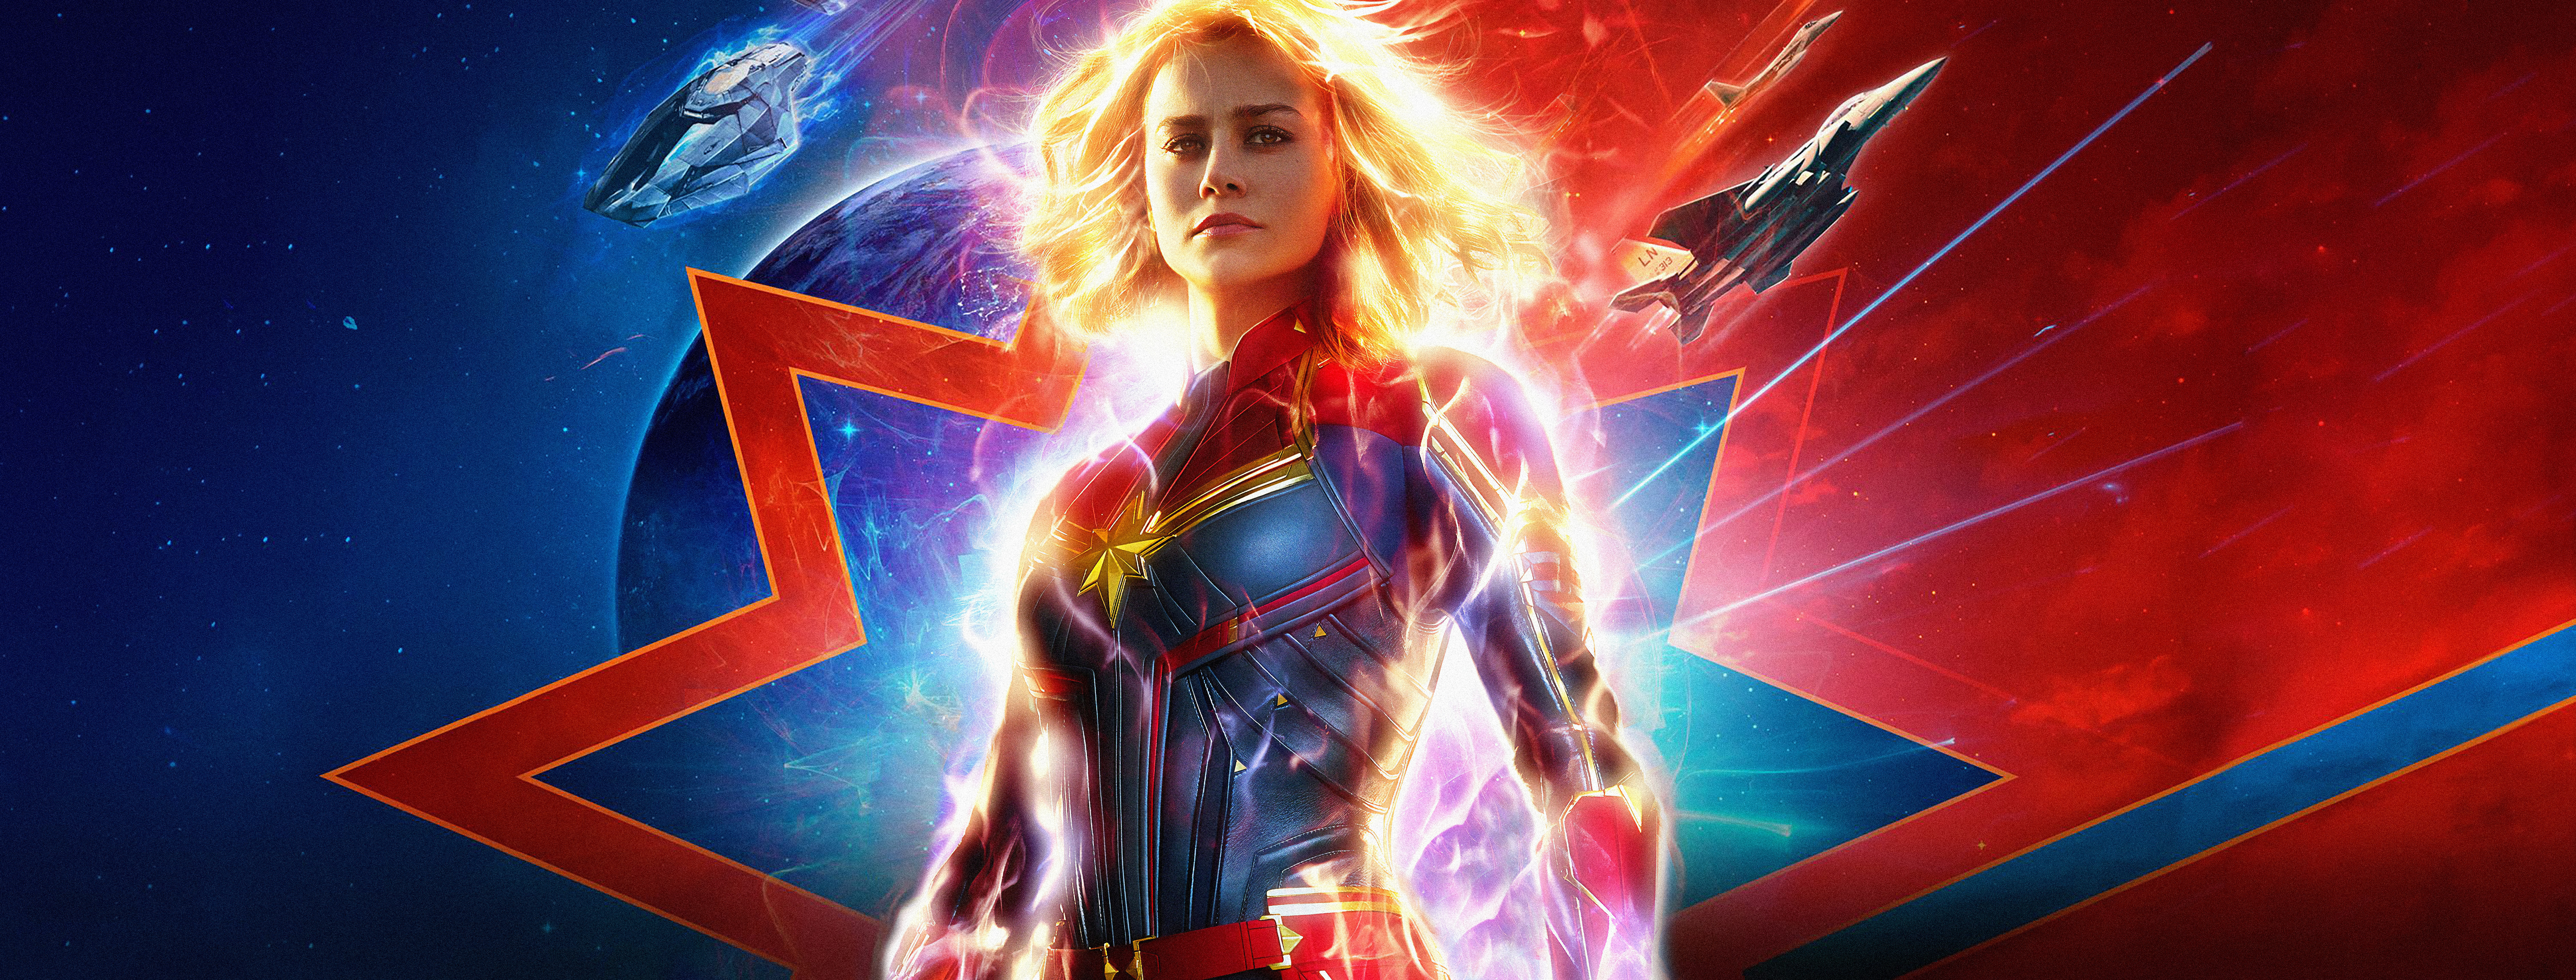 Captain Marvel 4k Ultra HD Wallpaper Background Image